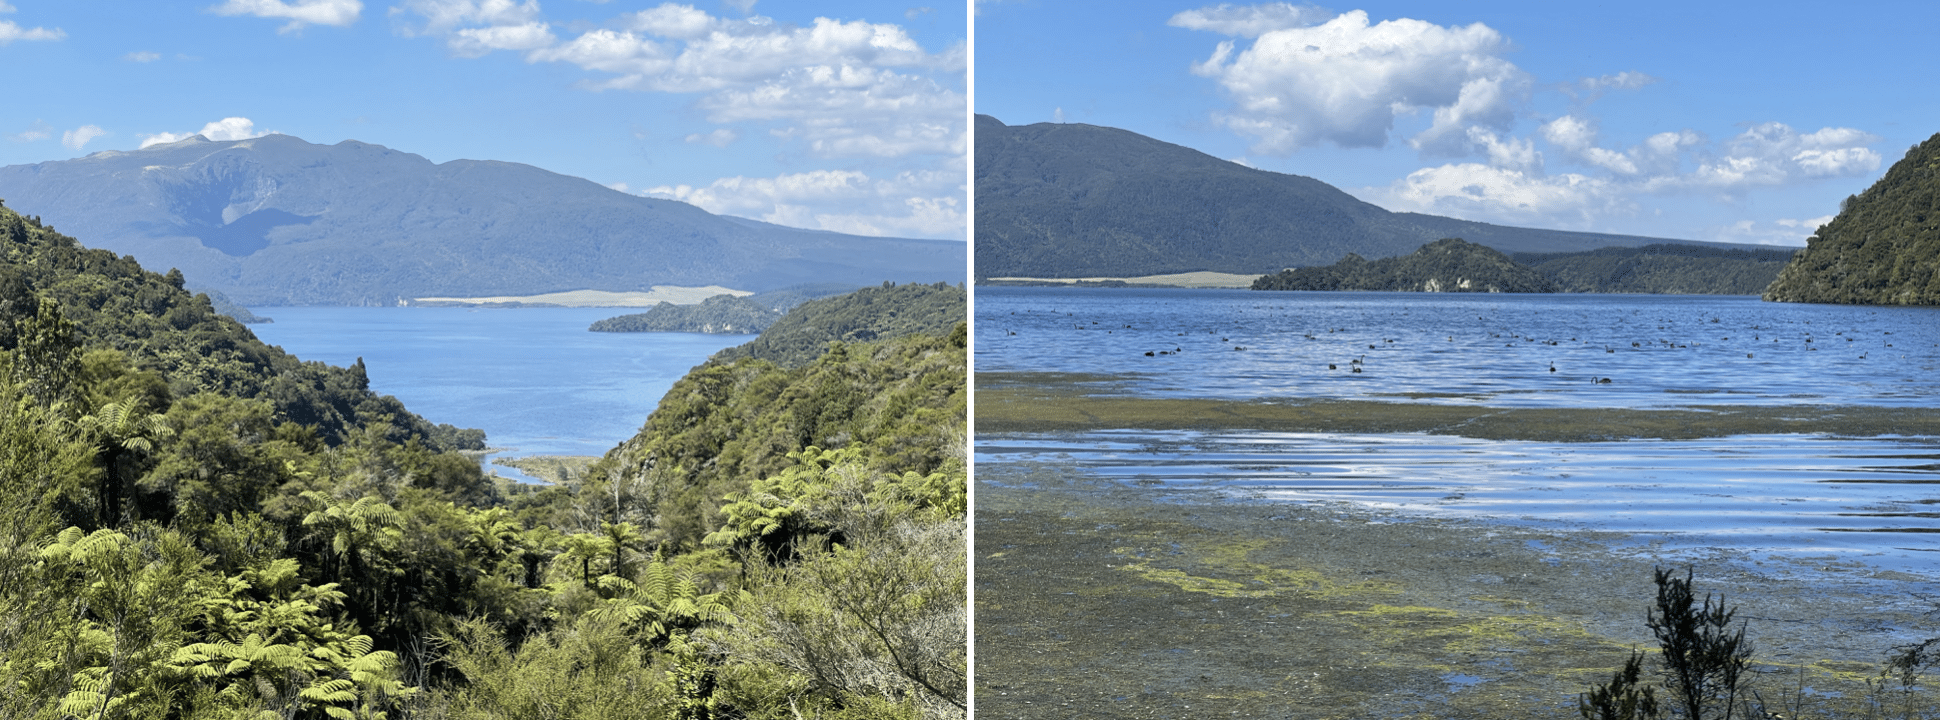 le lac rotomahana et ses cygnes noirs